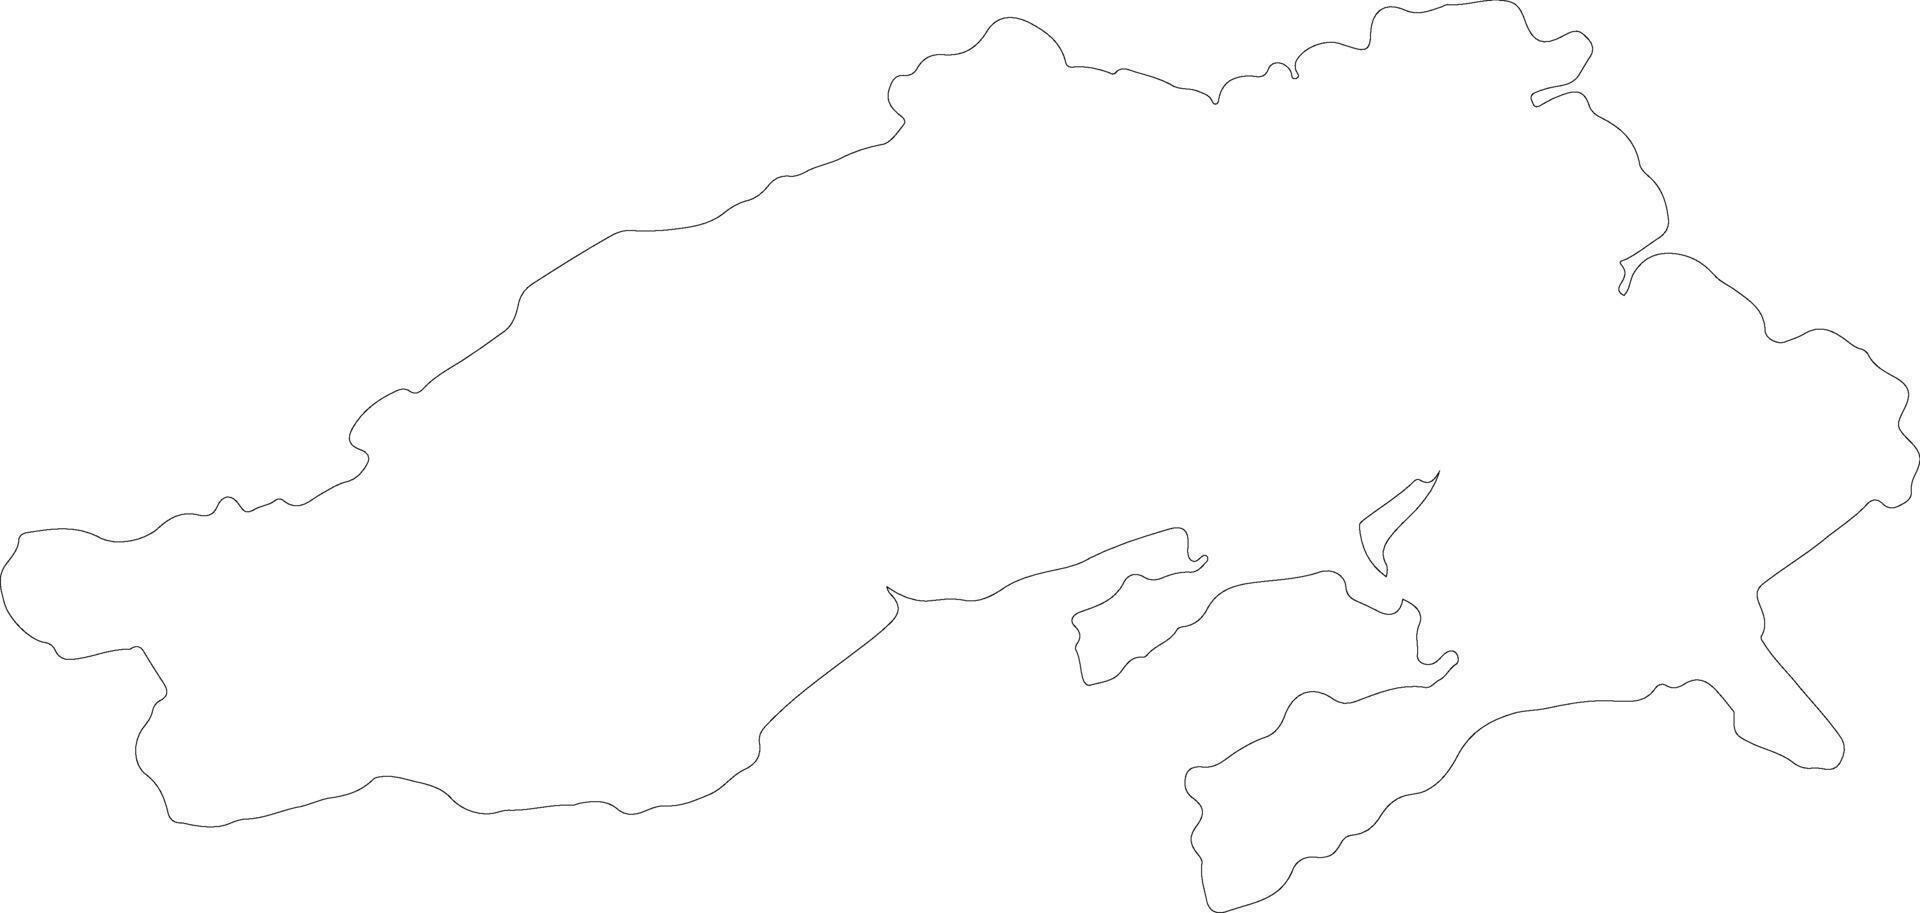 Arunachal Pradesh India outline map vector